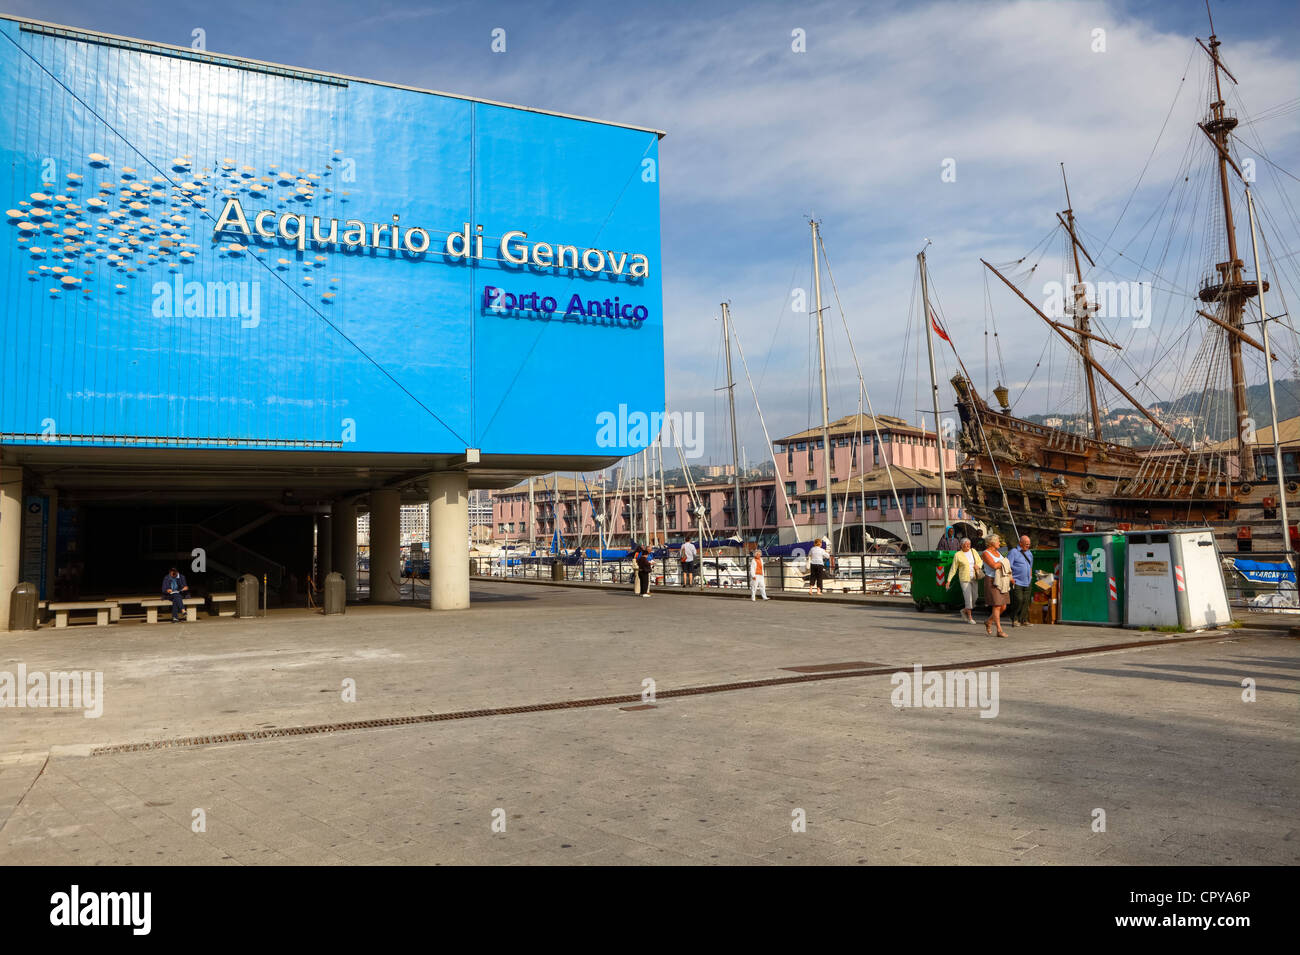 Aquarium of Genoa, Porto Antico, the background pirate ship Neptune, Liguria, Italy Stock Photo